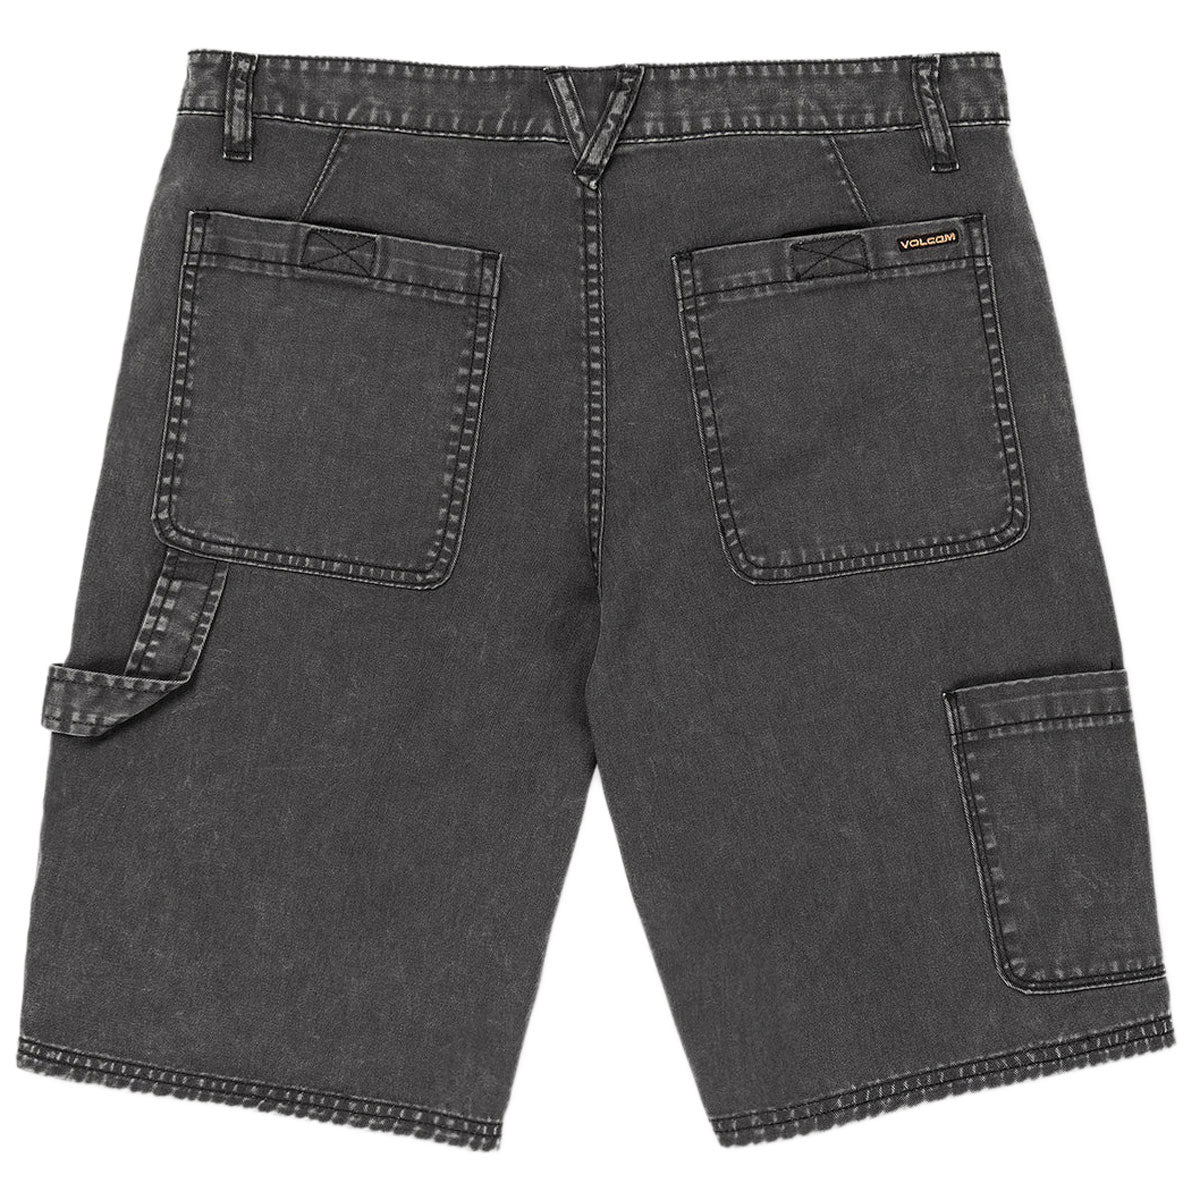 Volcom Kraftsman Denim 21 Shorts - Black image 2